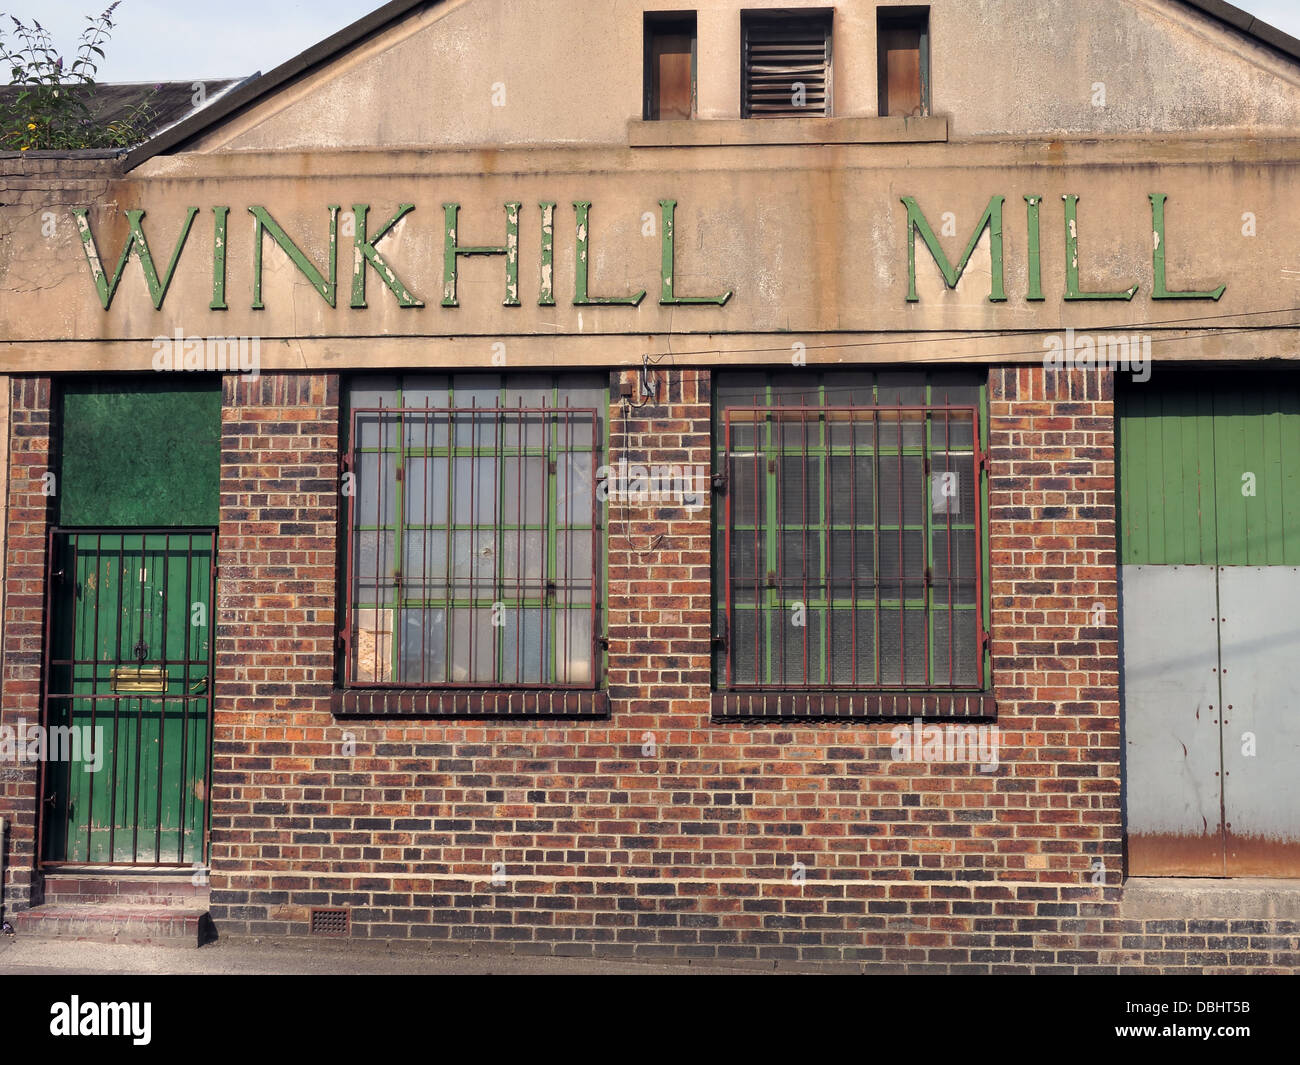 Winkhill Mill, Swan St, Stoke-on-Trent, Staffordshire, England, UK,  ST4 7RH Stock Photo